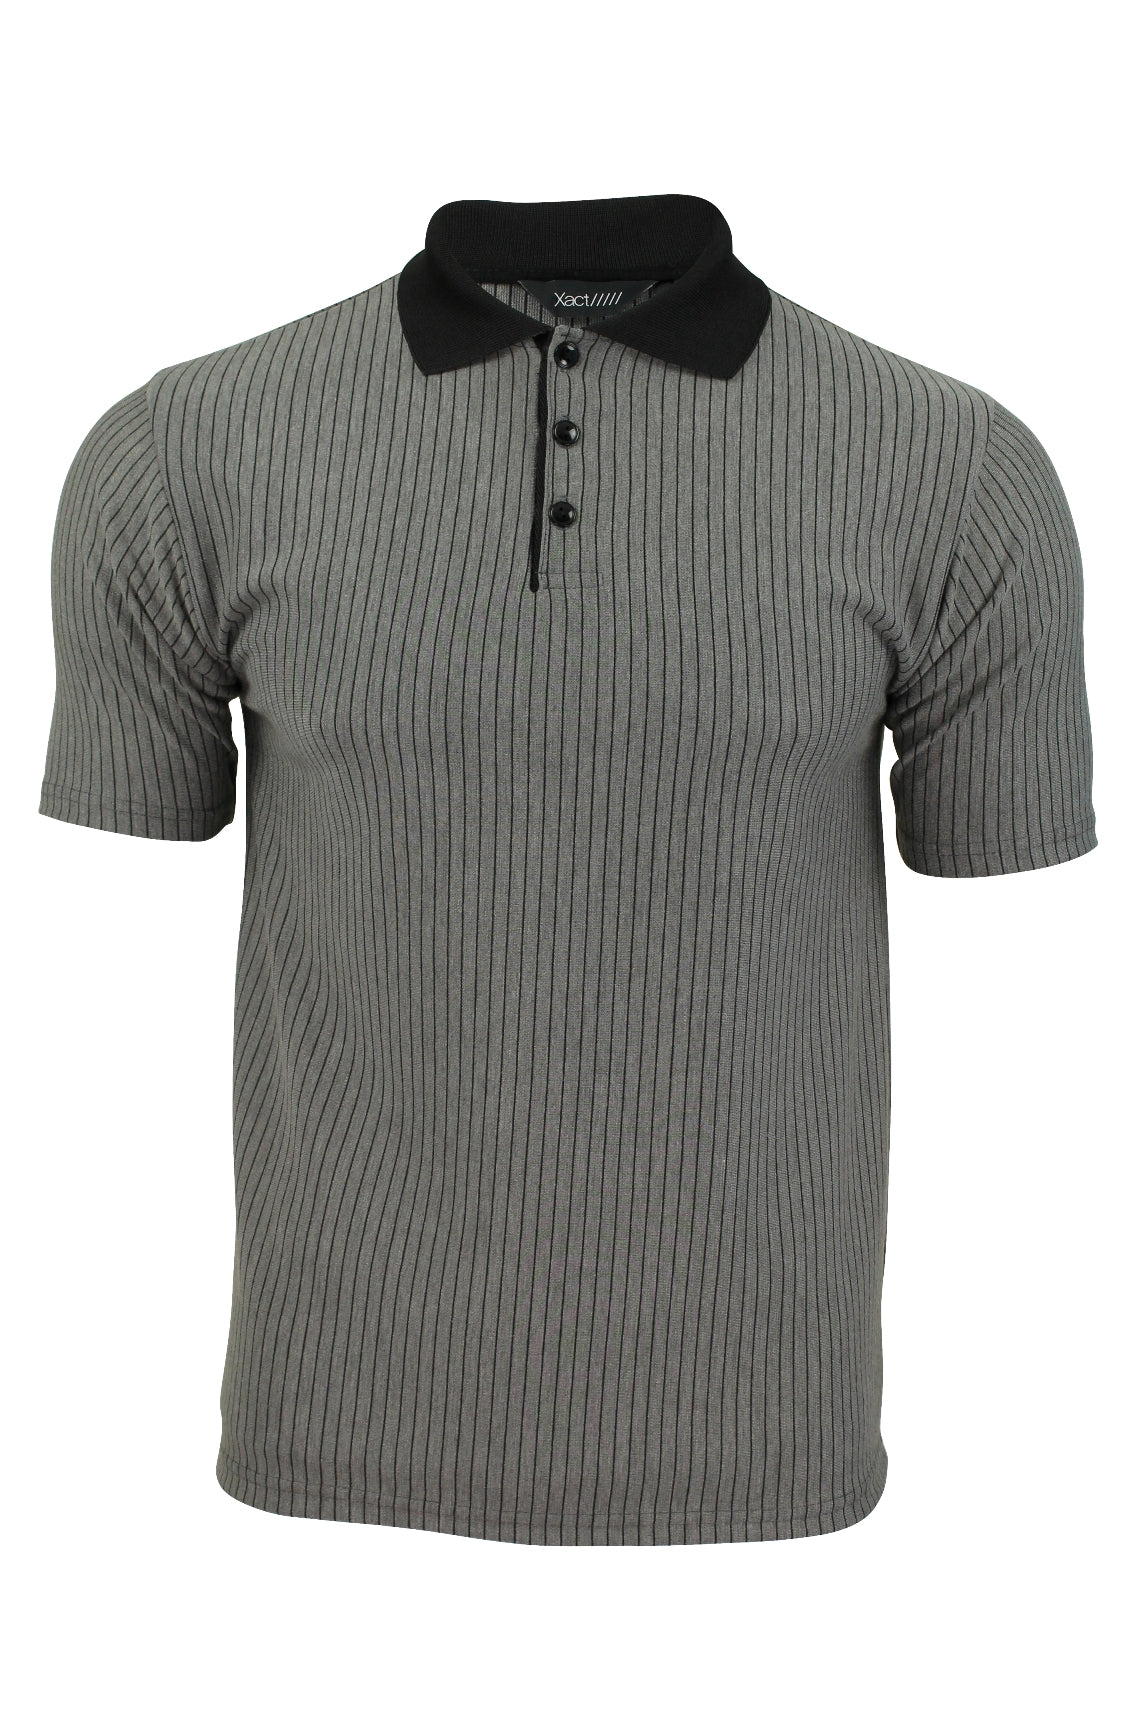 Mens Stripe Polo Shirt by Xact Clothing Short Sleeved, 01, X-03, Grey